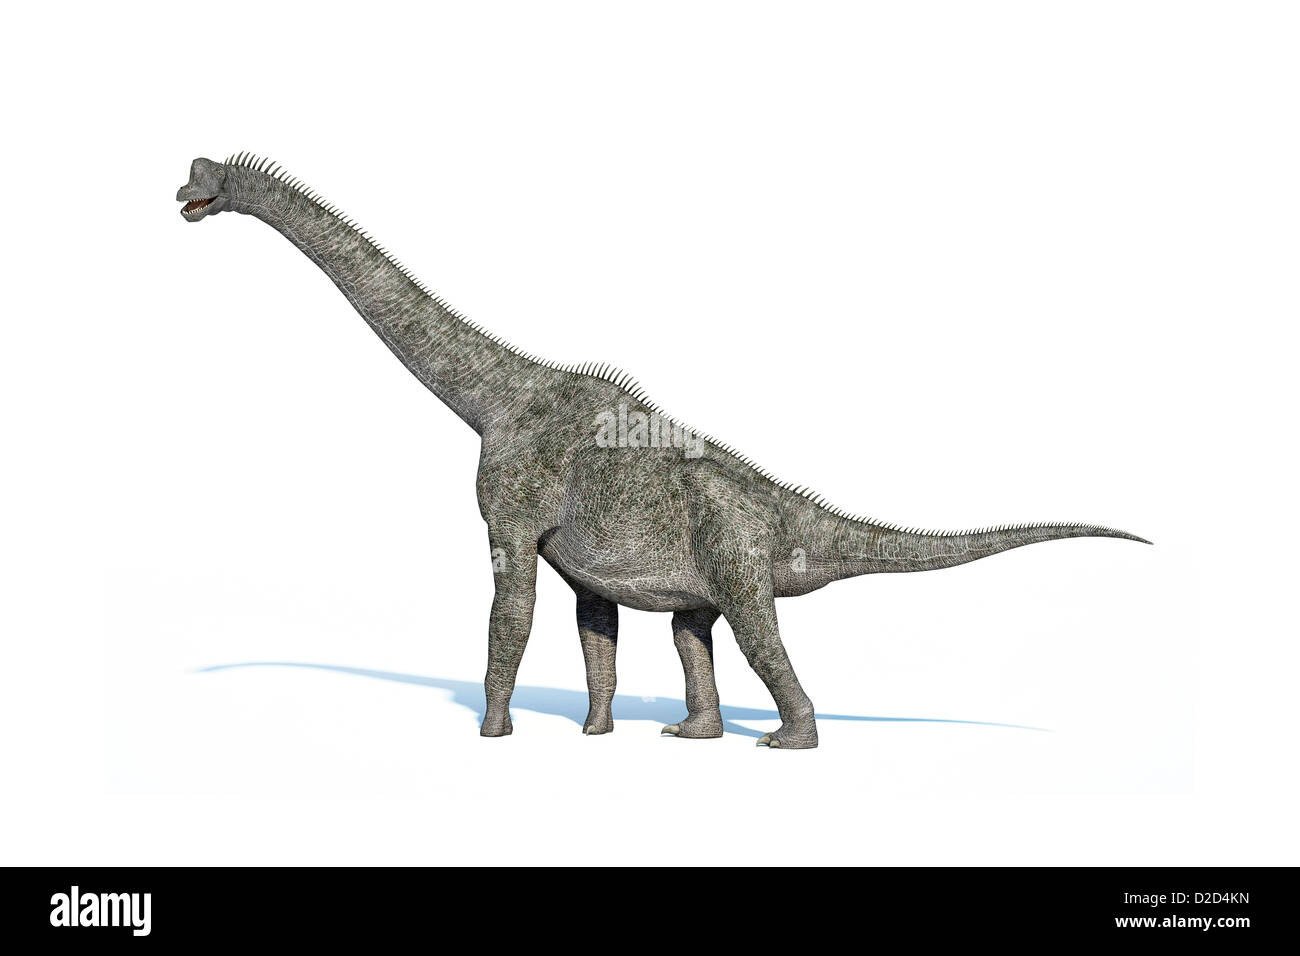 Brachiosaurus dinosaur tallest dinosaur up to 16 metres tall late Jurassic period between 155 and 145 million years ago Stock Photo